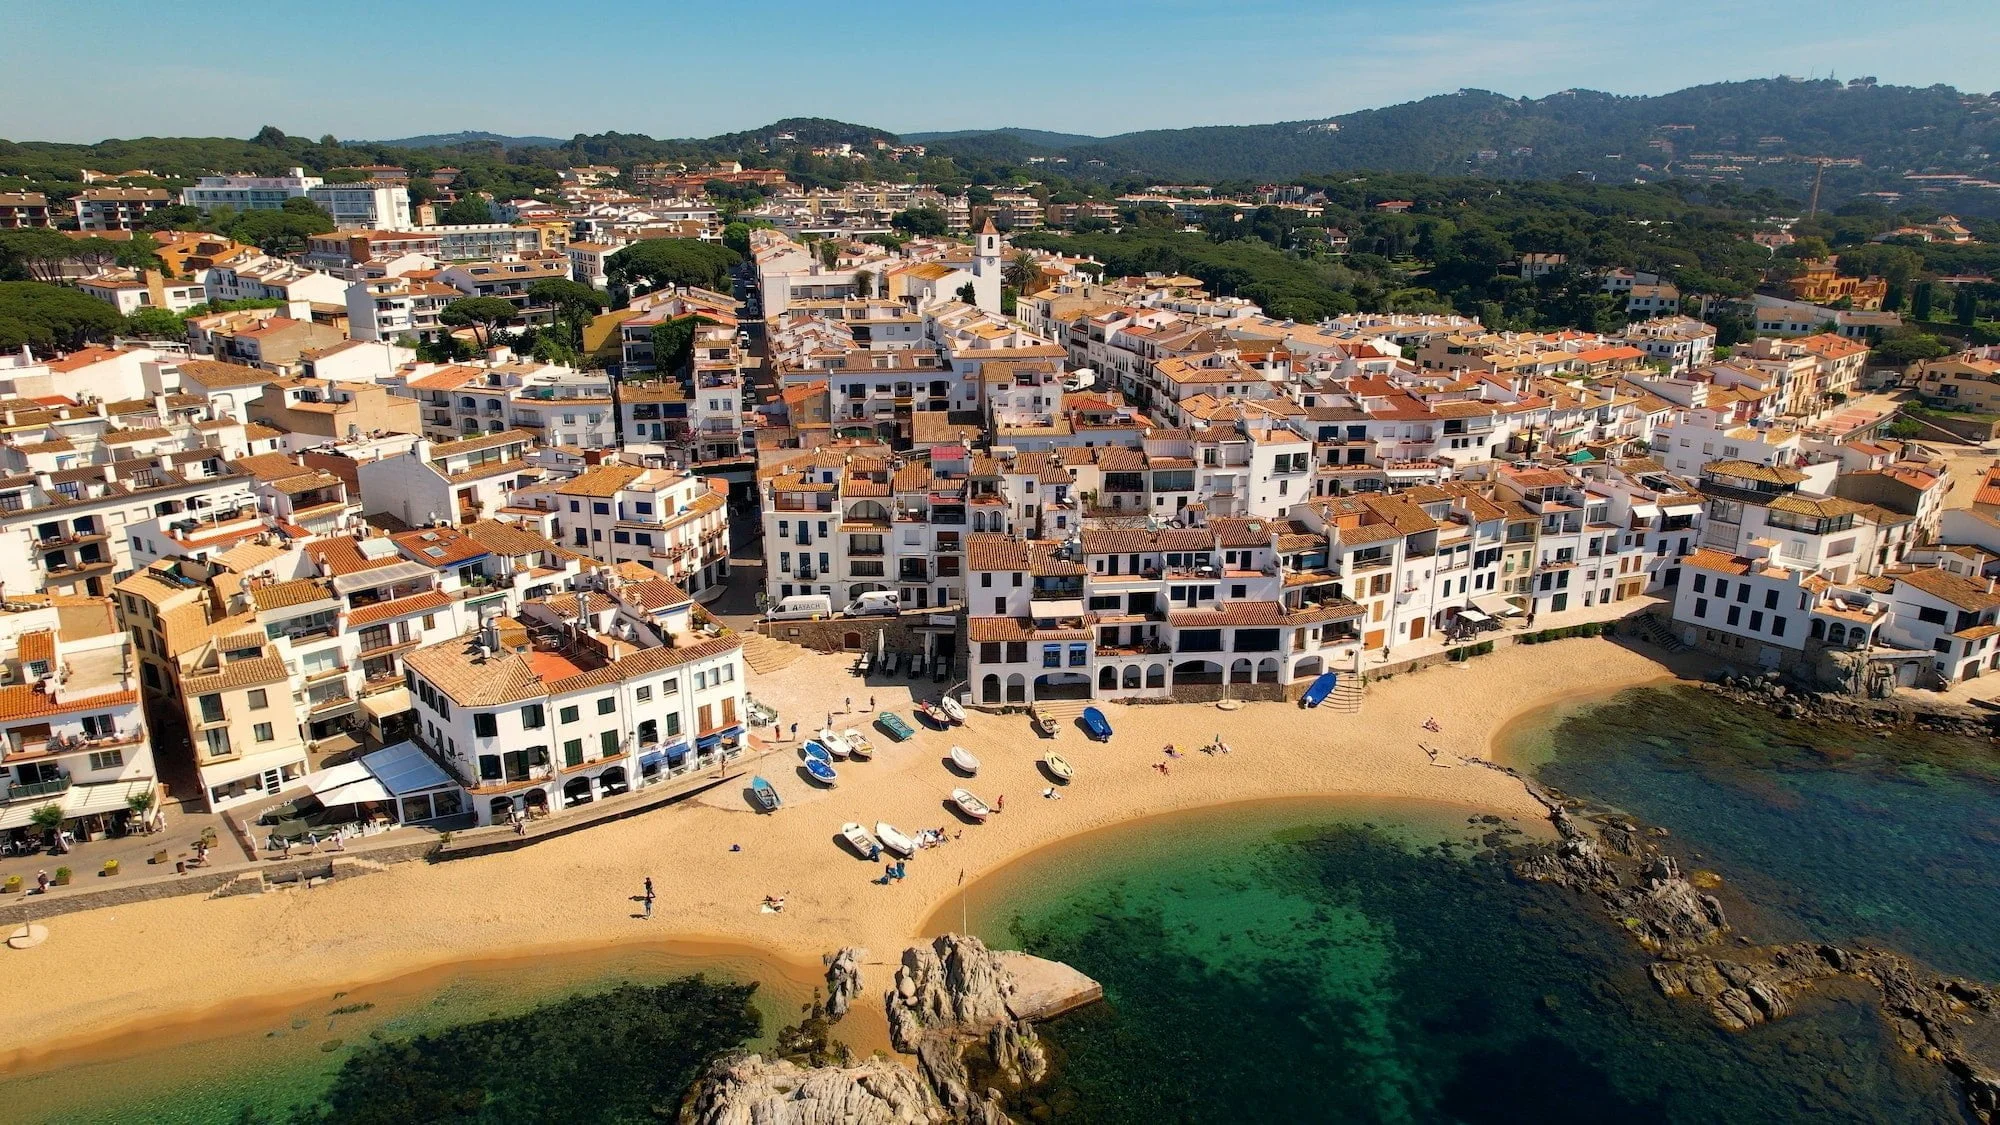 Aerial view of Costa Brava paradise beach in summer. Calella de Palafrugell village